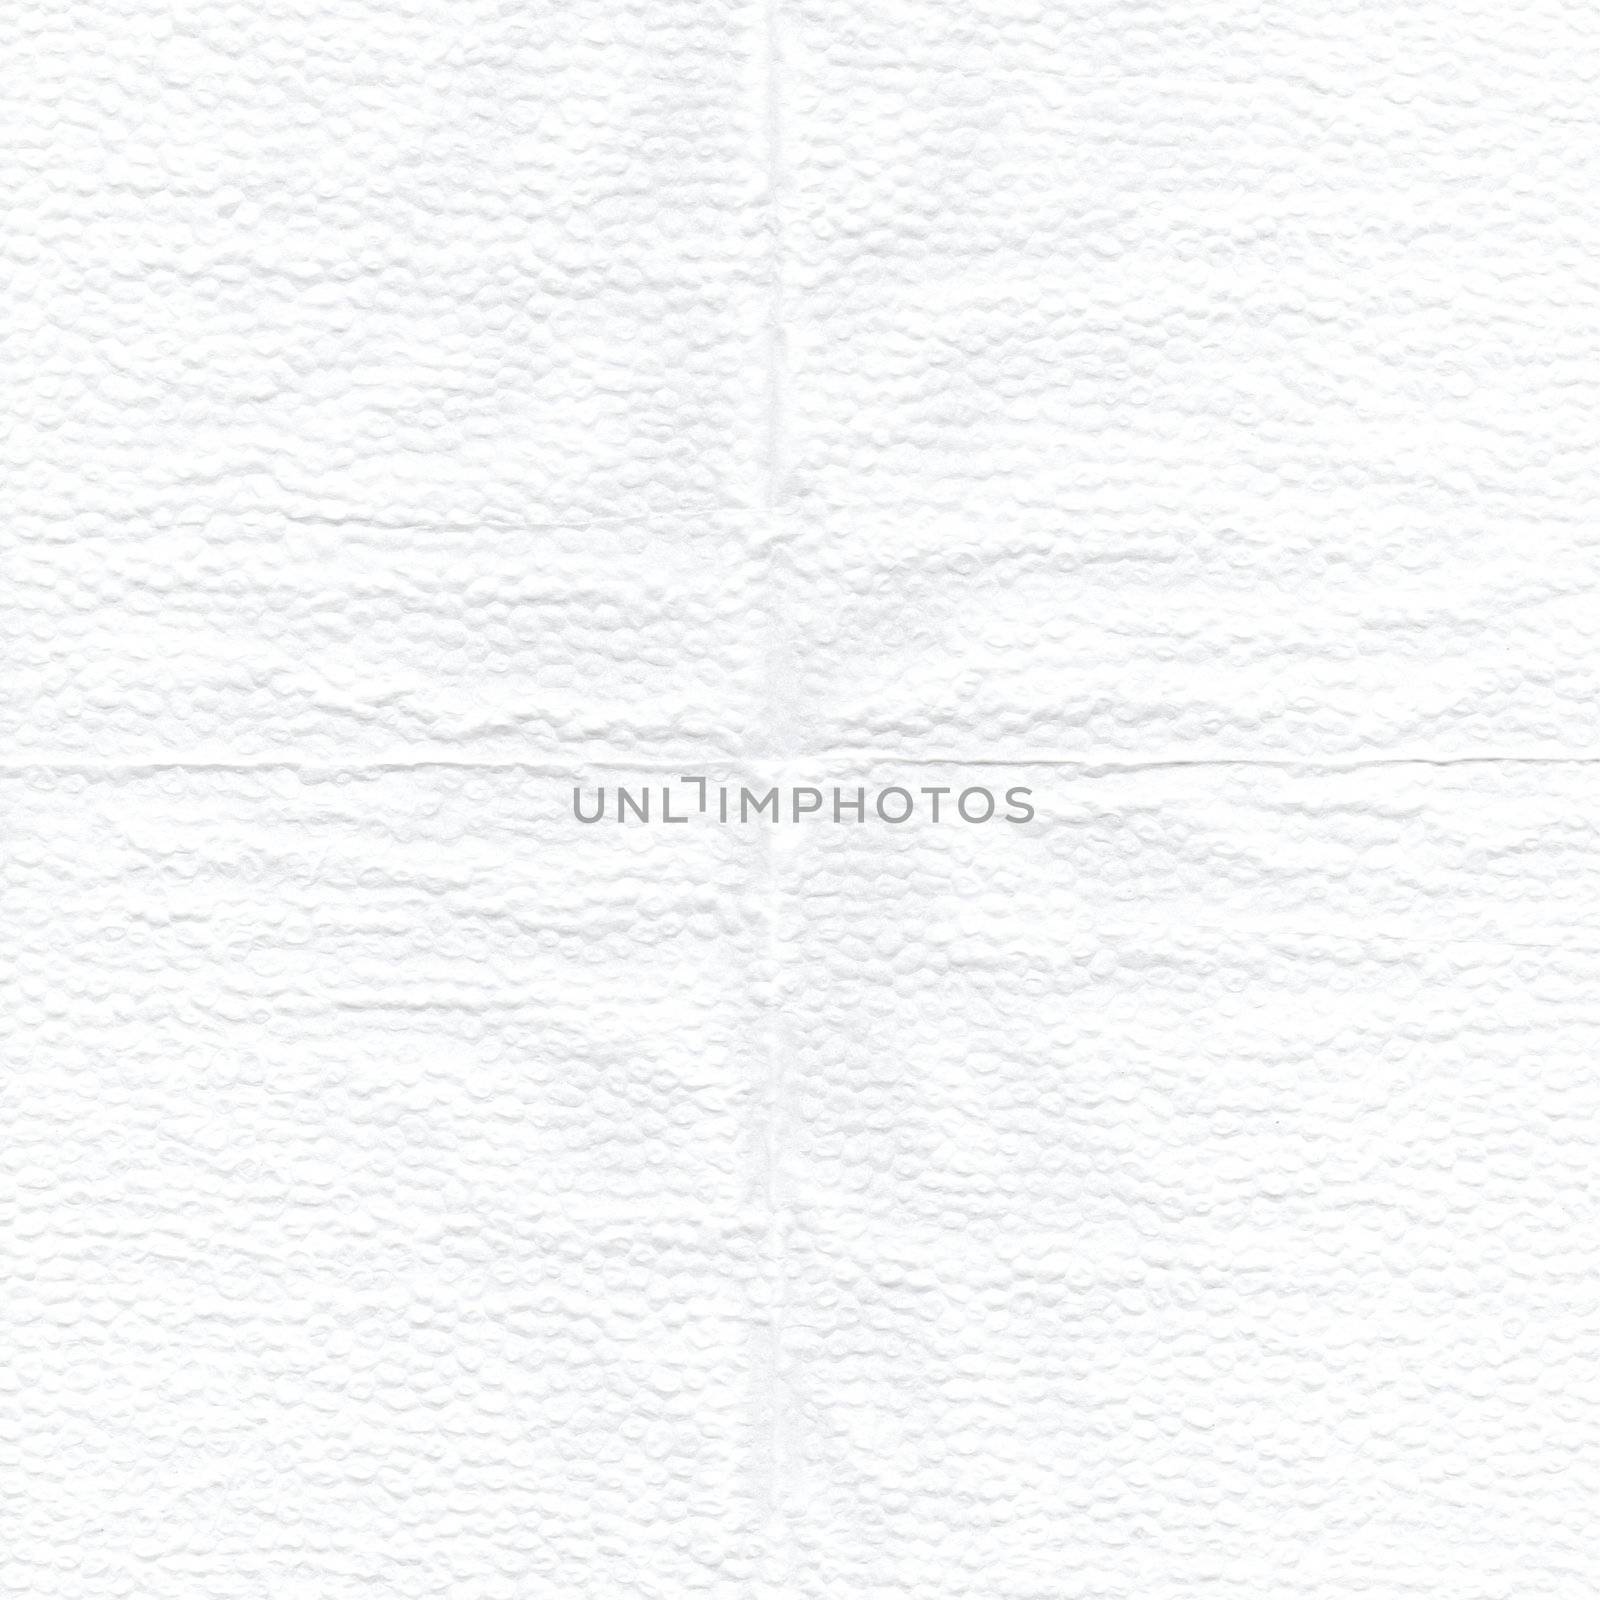 Textured white paper - empty background